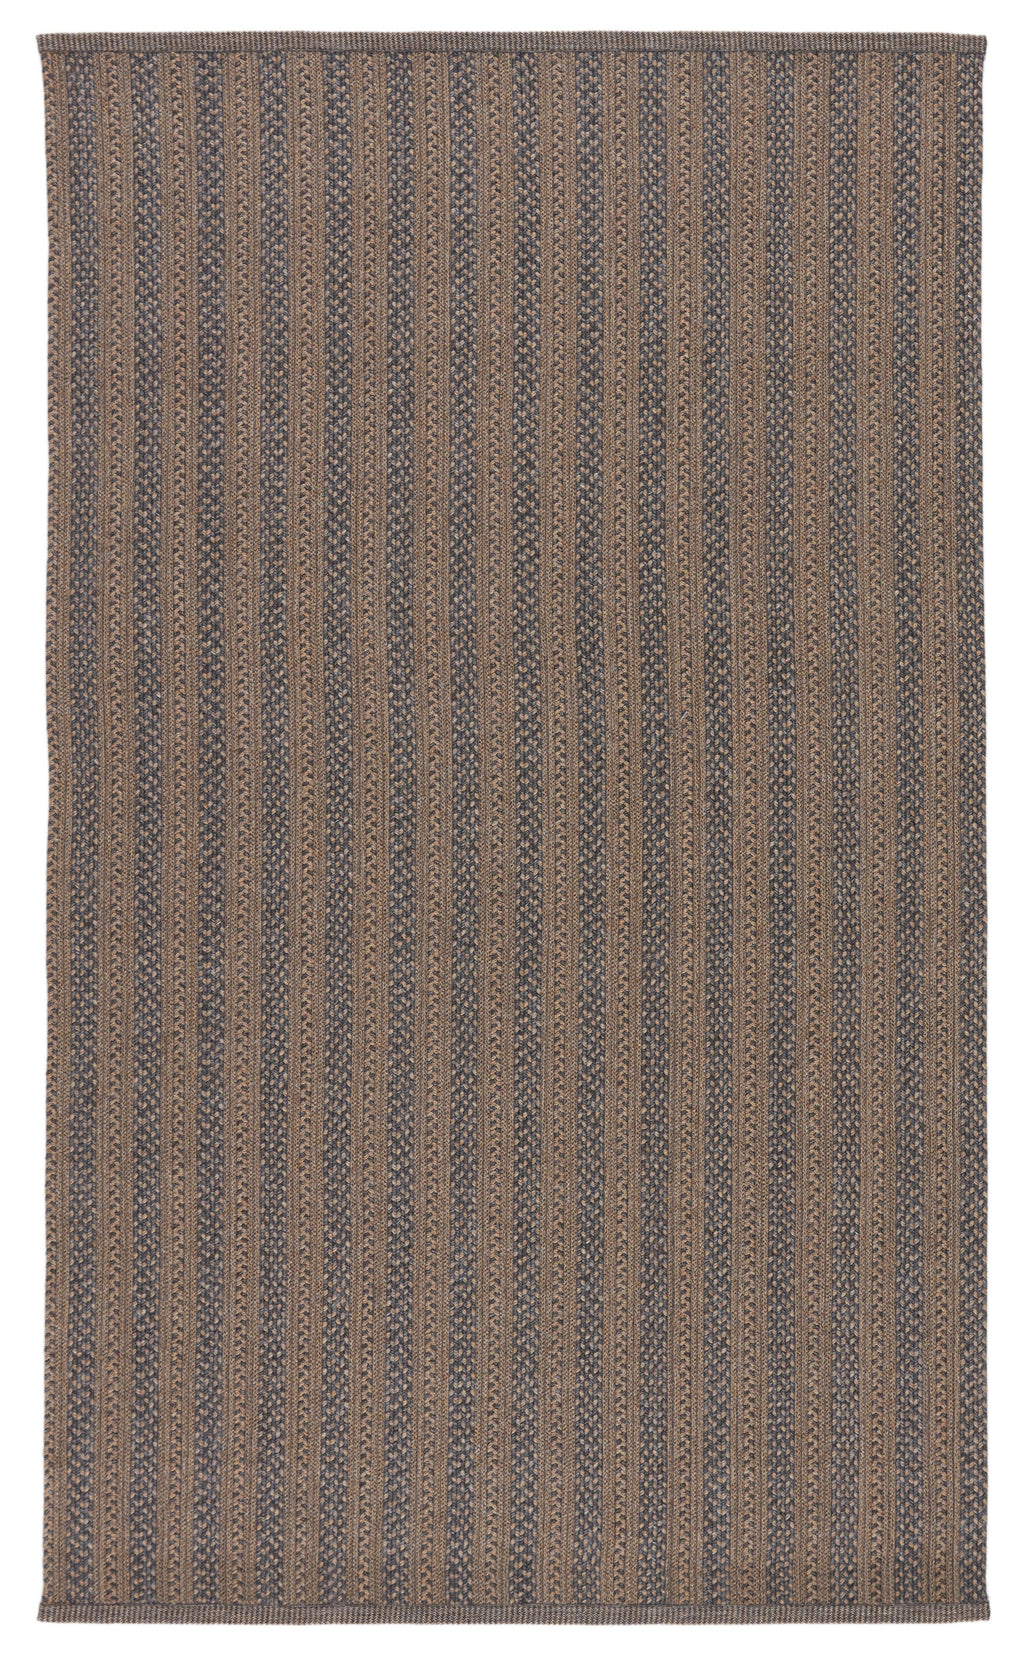 Madaket Handmade Indoor/Outdoor Stripes Rug in Taupe & Gray